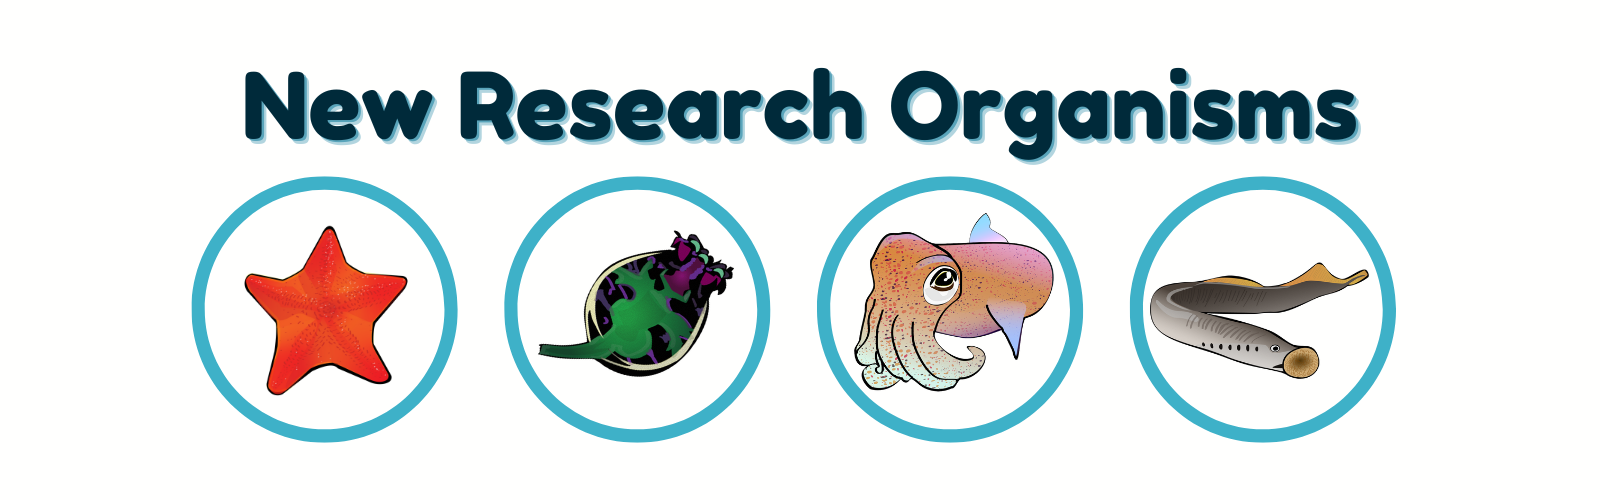 New Research Organisms Division - Bat Sea Star, Rotifer, Hummingbird Bobtail Squid, Sea Lamprey